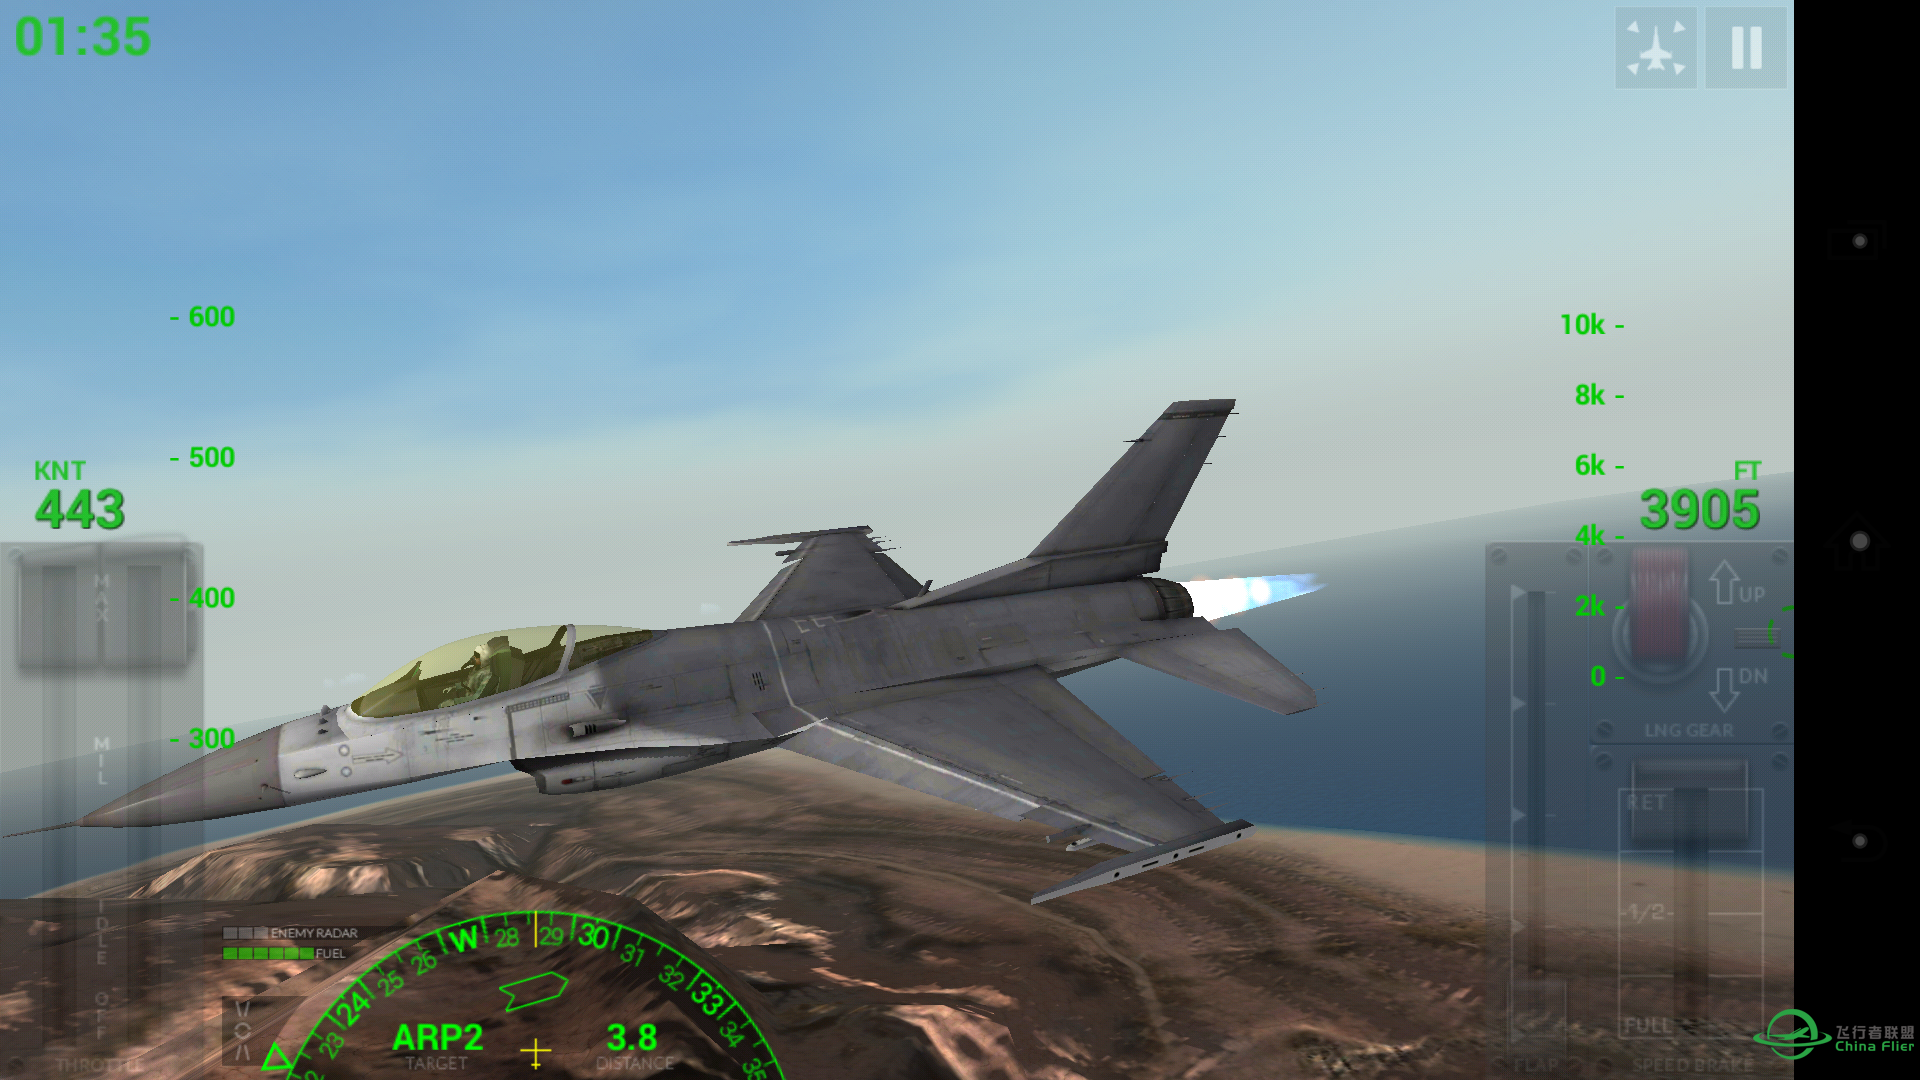 [截图而已]F18 Carrier Landing2 Pro-3125 